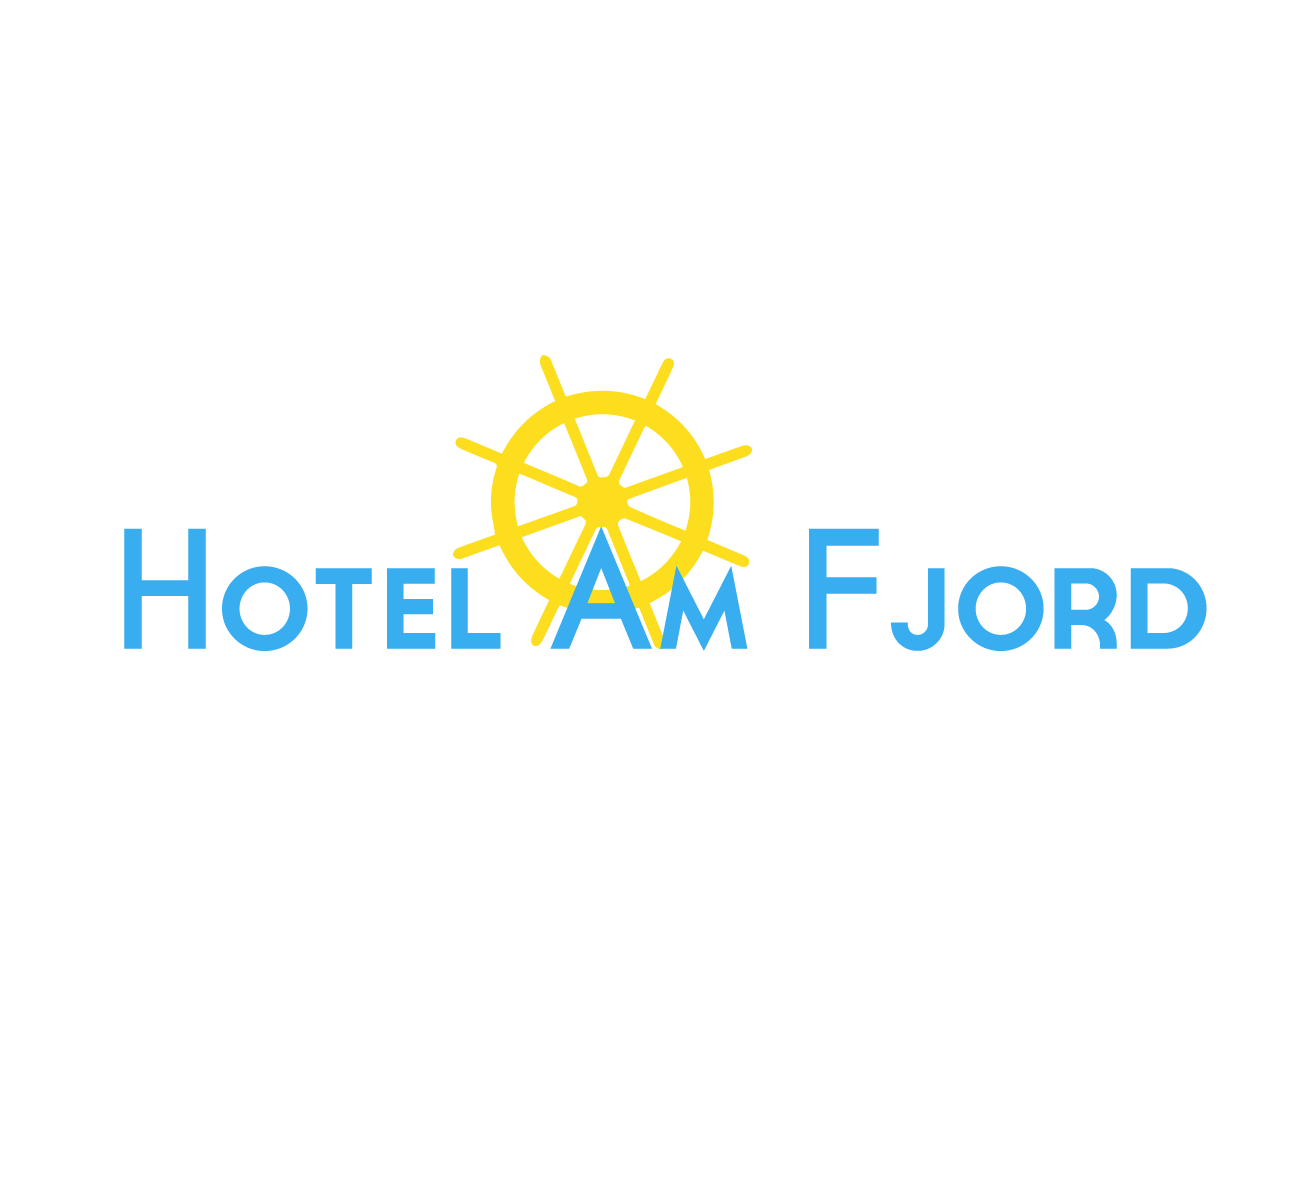 Graham Logo - Hotel Logo Design for Hotel am Fjord by graham | Design #5095735